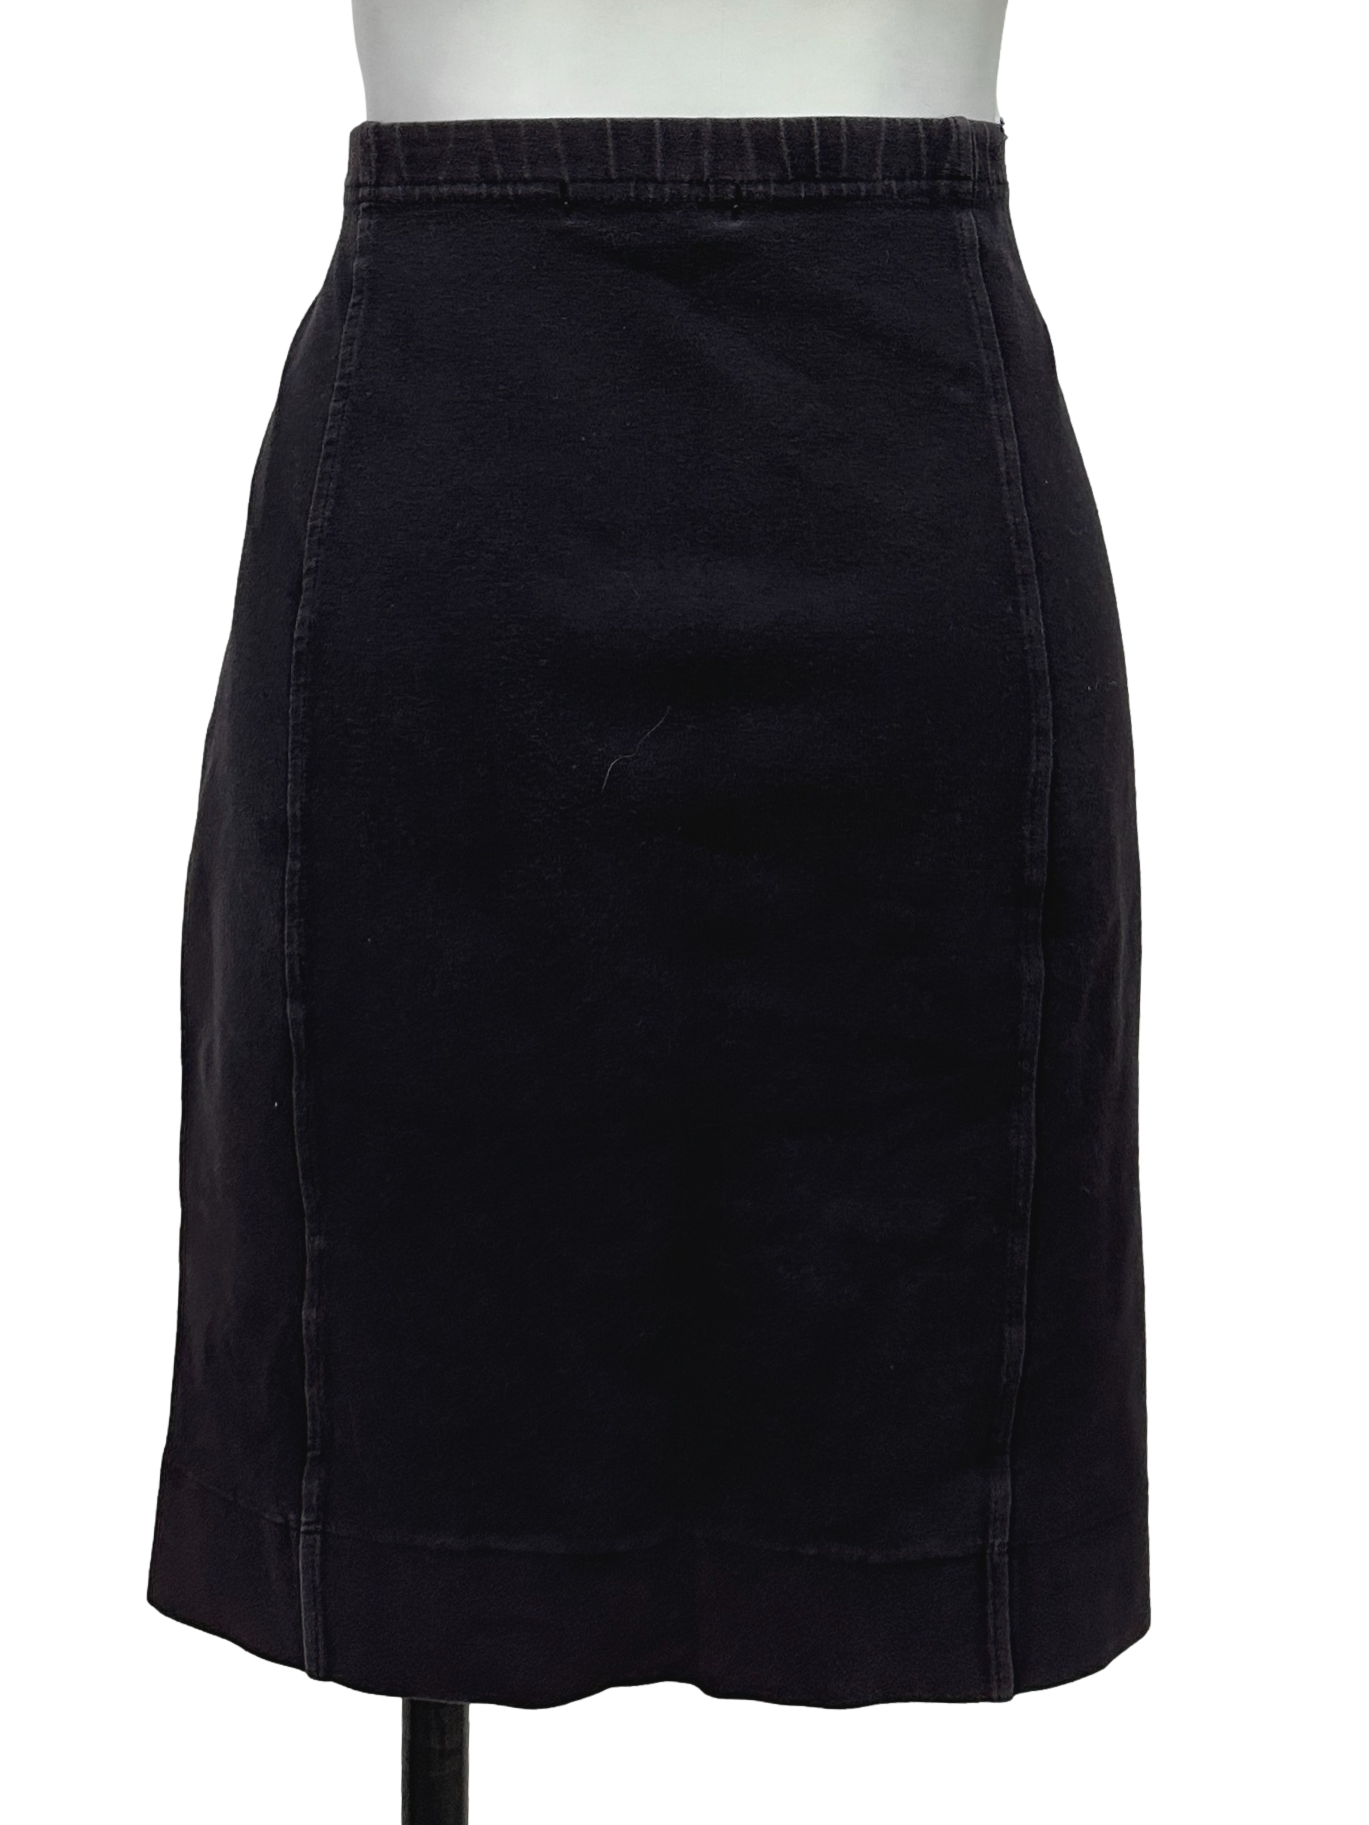 Faded Black Pencil Skirt